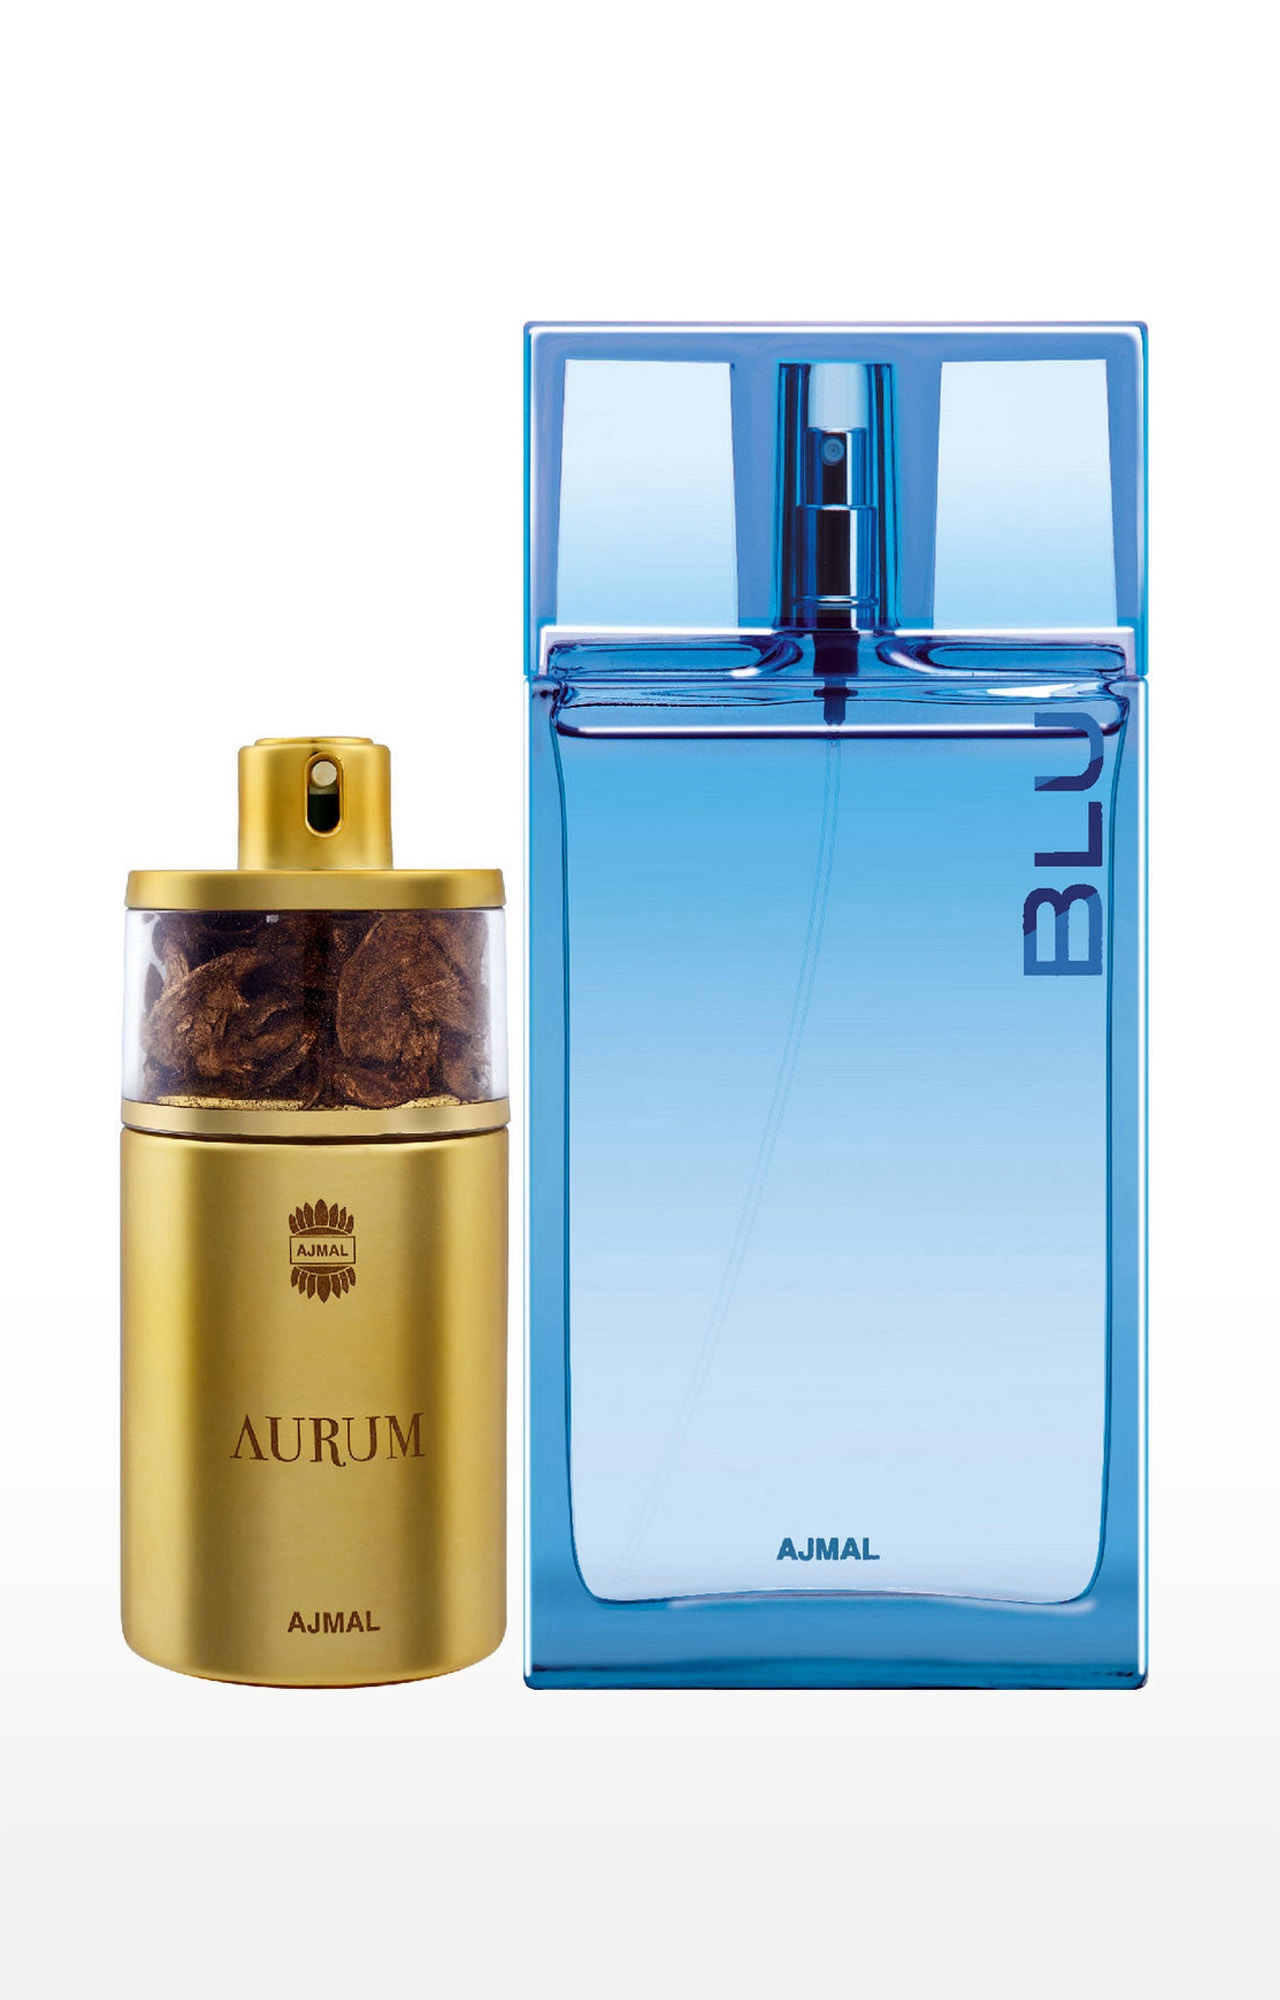 Ajmal | Ajmal Aurum EDP Fruity Floral Perfume 75ml for Women and Blu EDP Aquatic Woody Perfume 90ml for Men + 2 Parfum Testers FREE